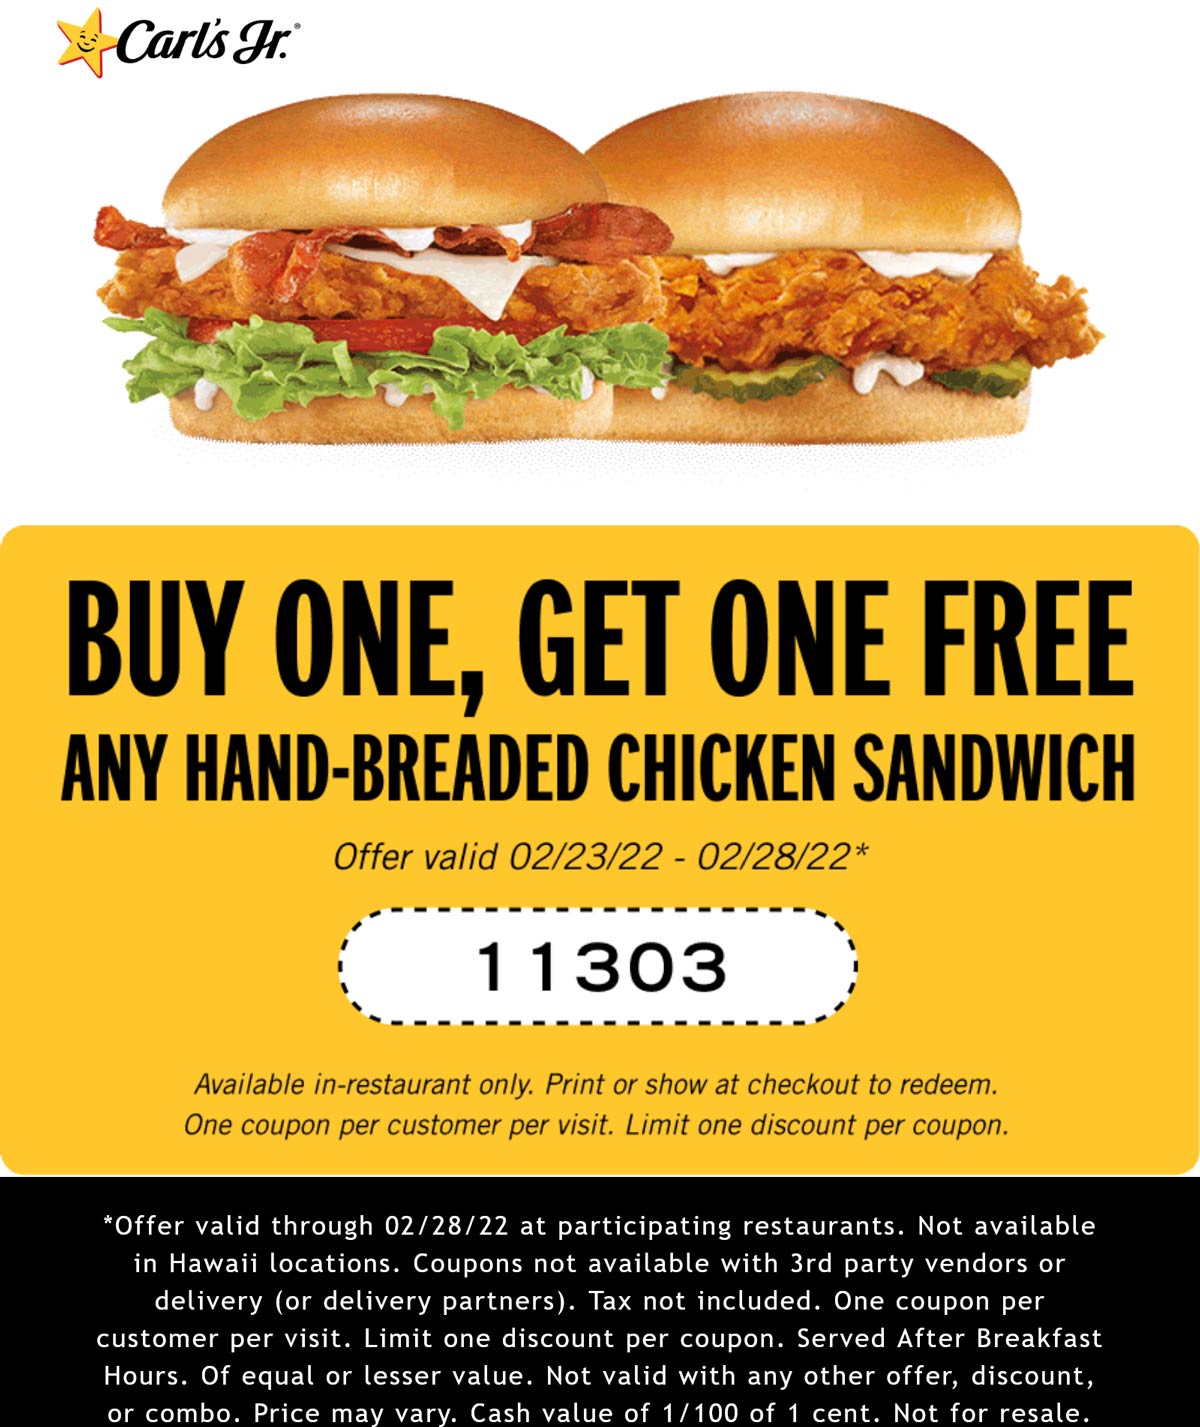 Carls Jr restaurants Coupon  Second chicken sandwich free at Carls Jr #carlsjr 